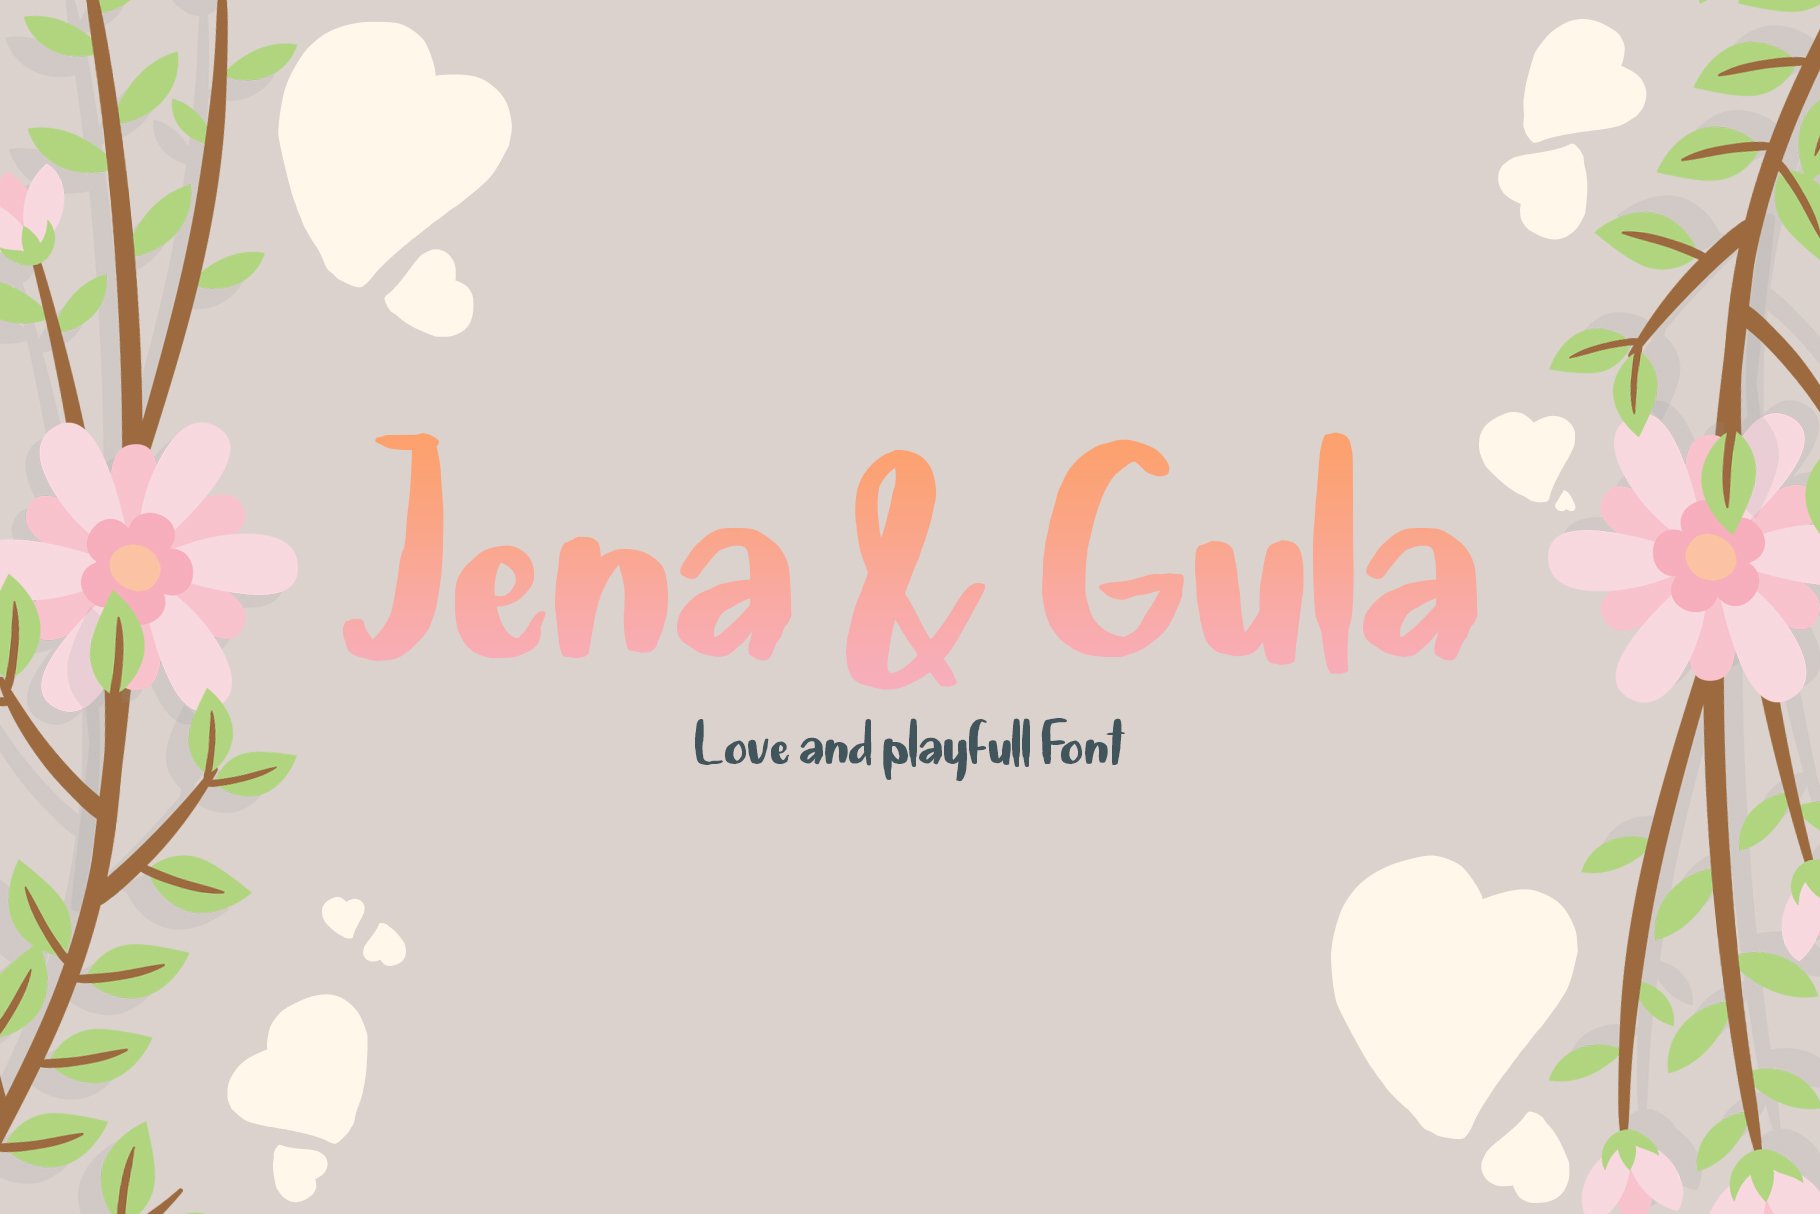 Jena & Gula | Love and Playfull Font cover image.